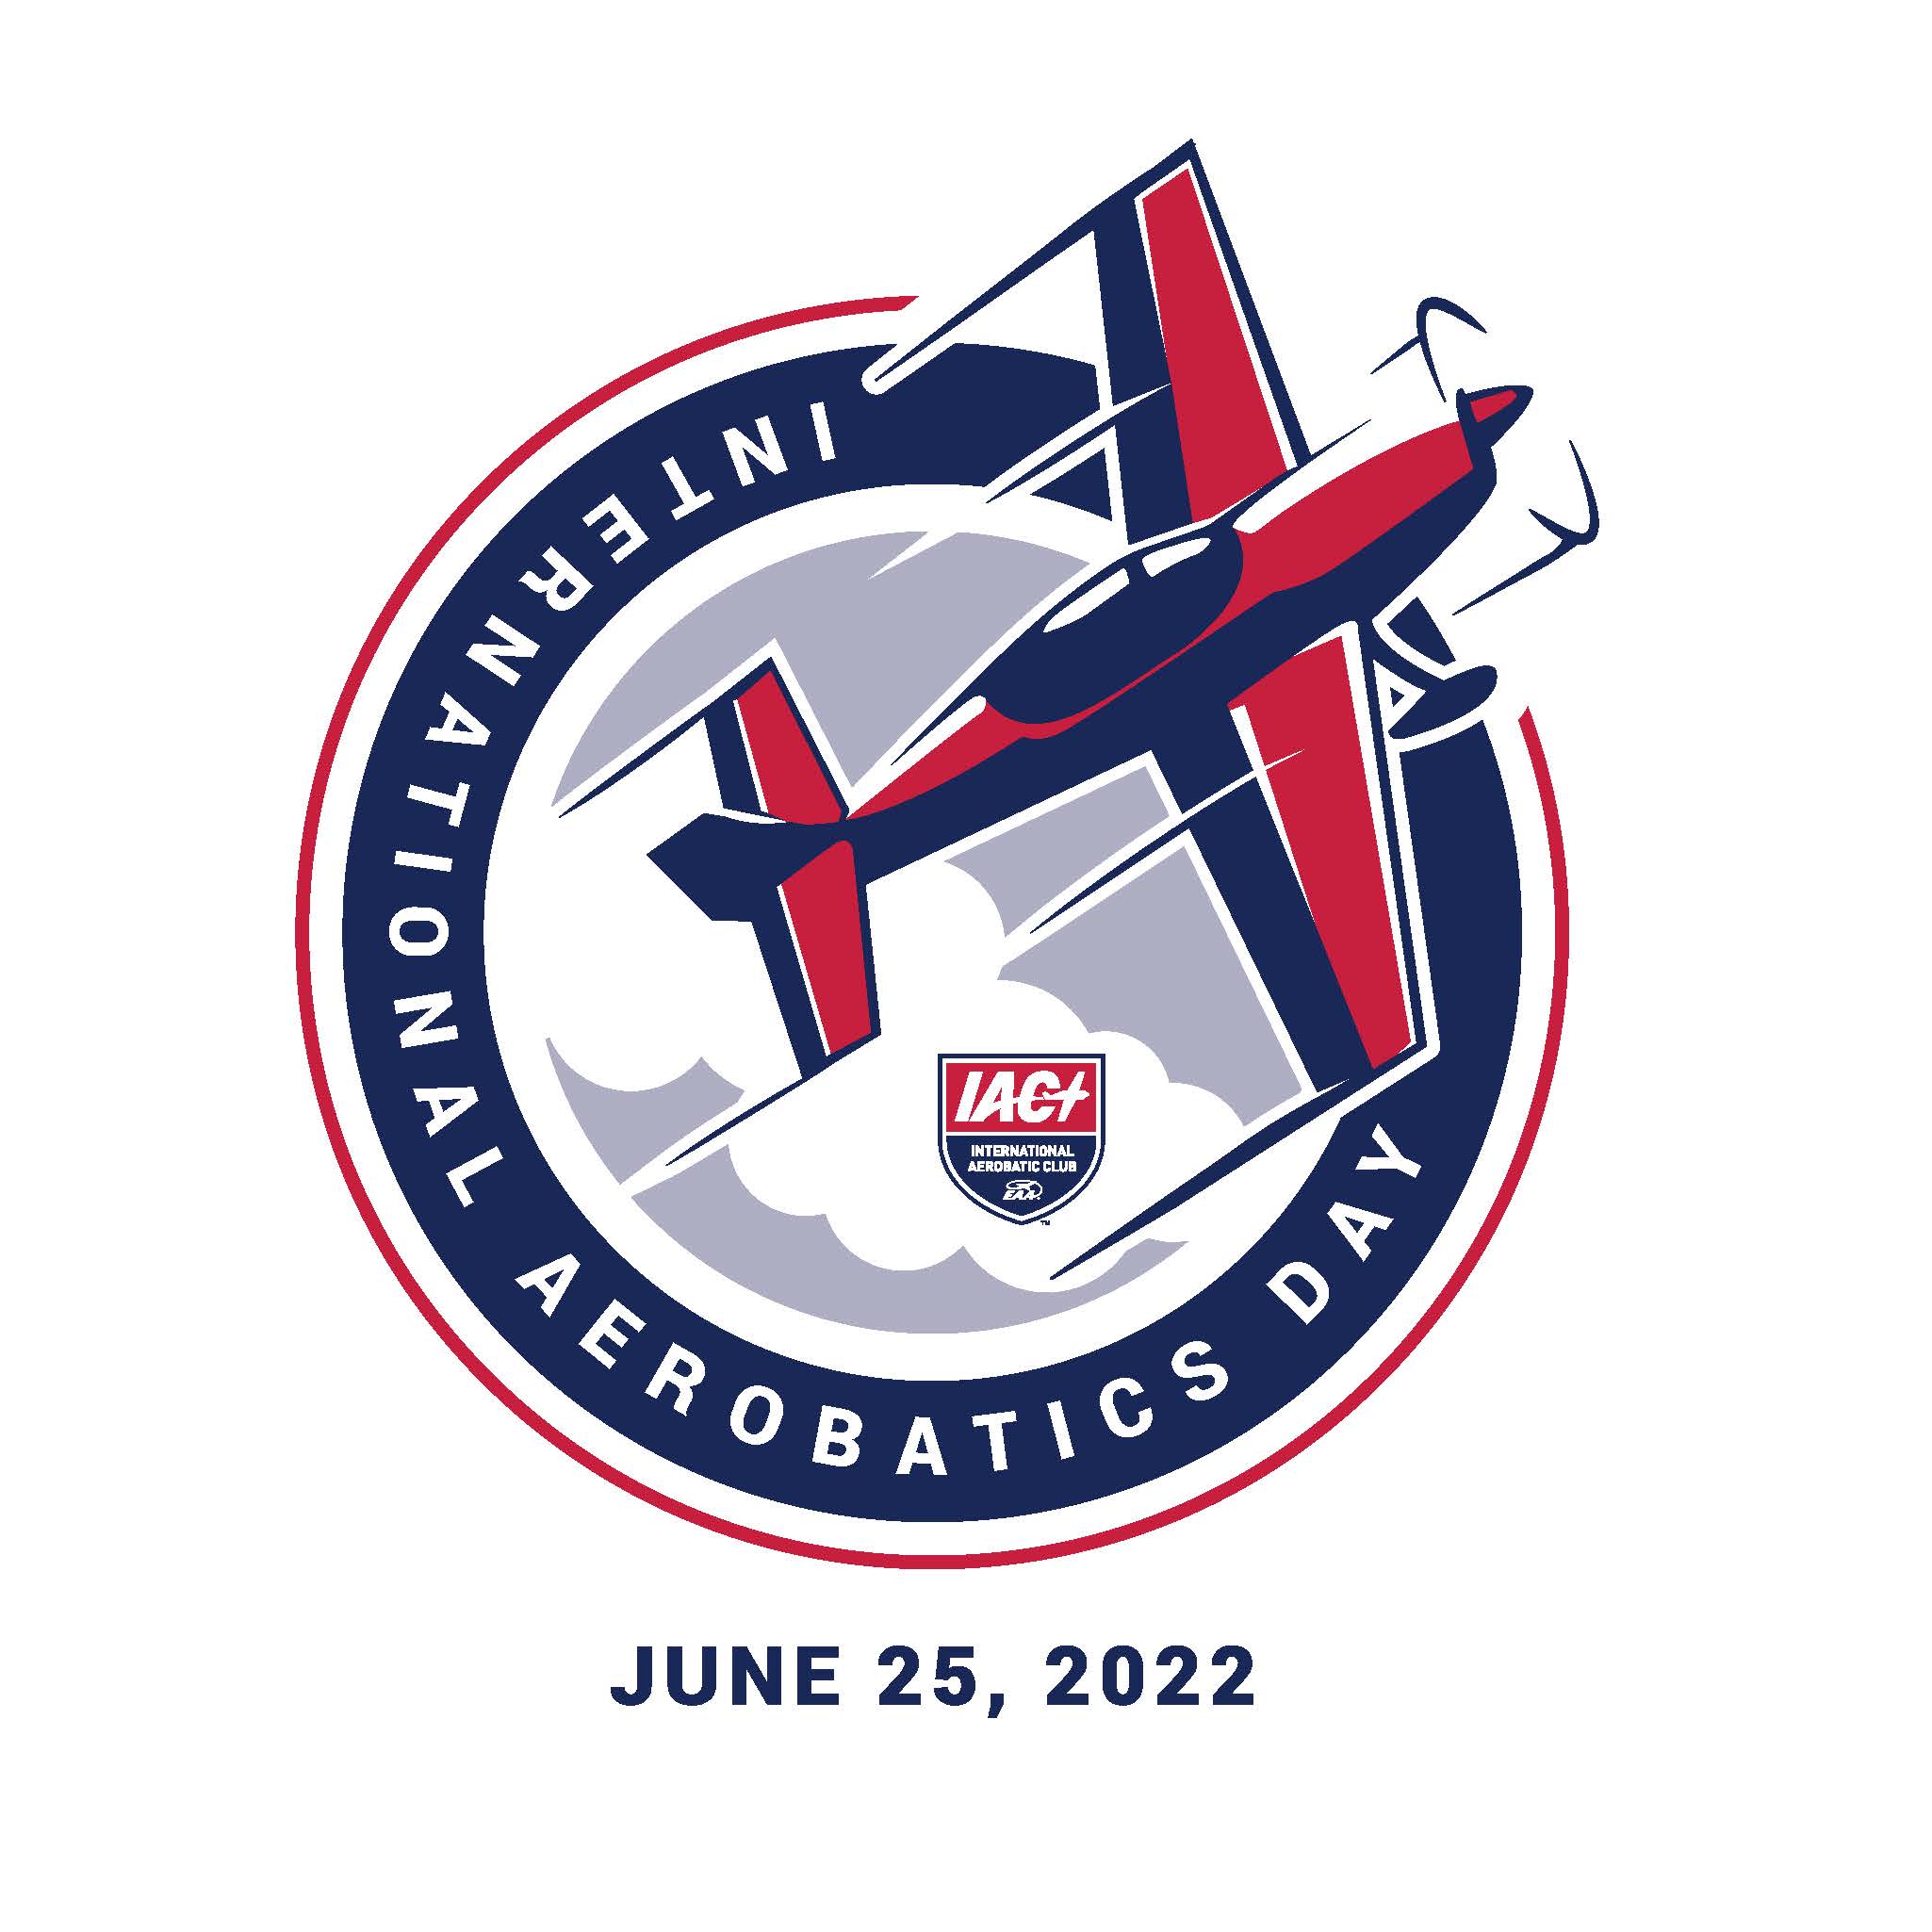 International Aerobatics Day 2022 logo